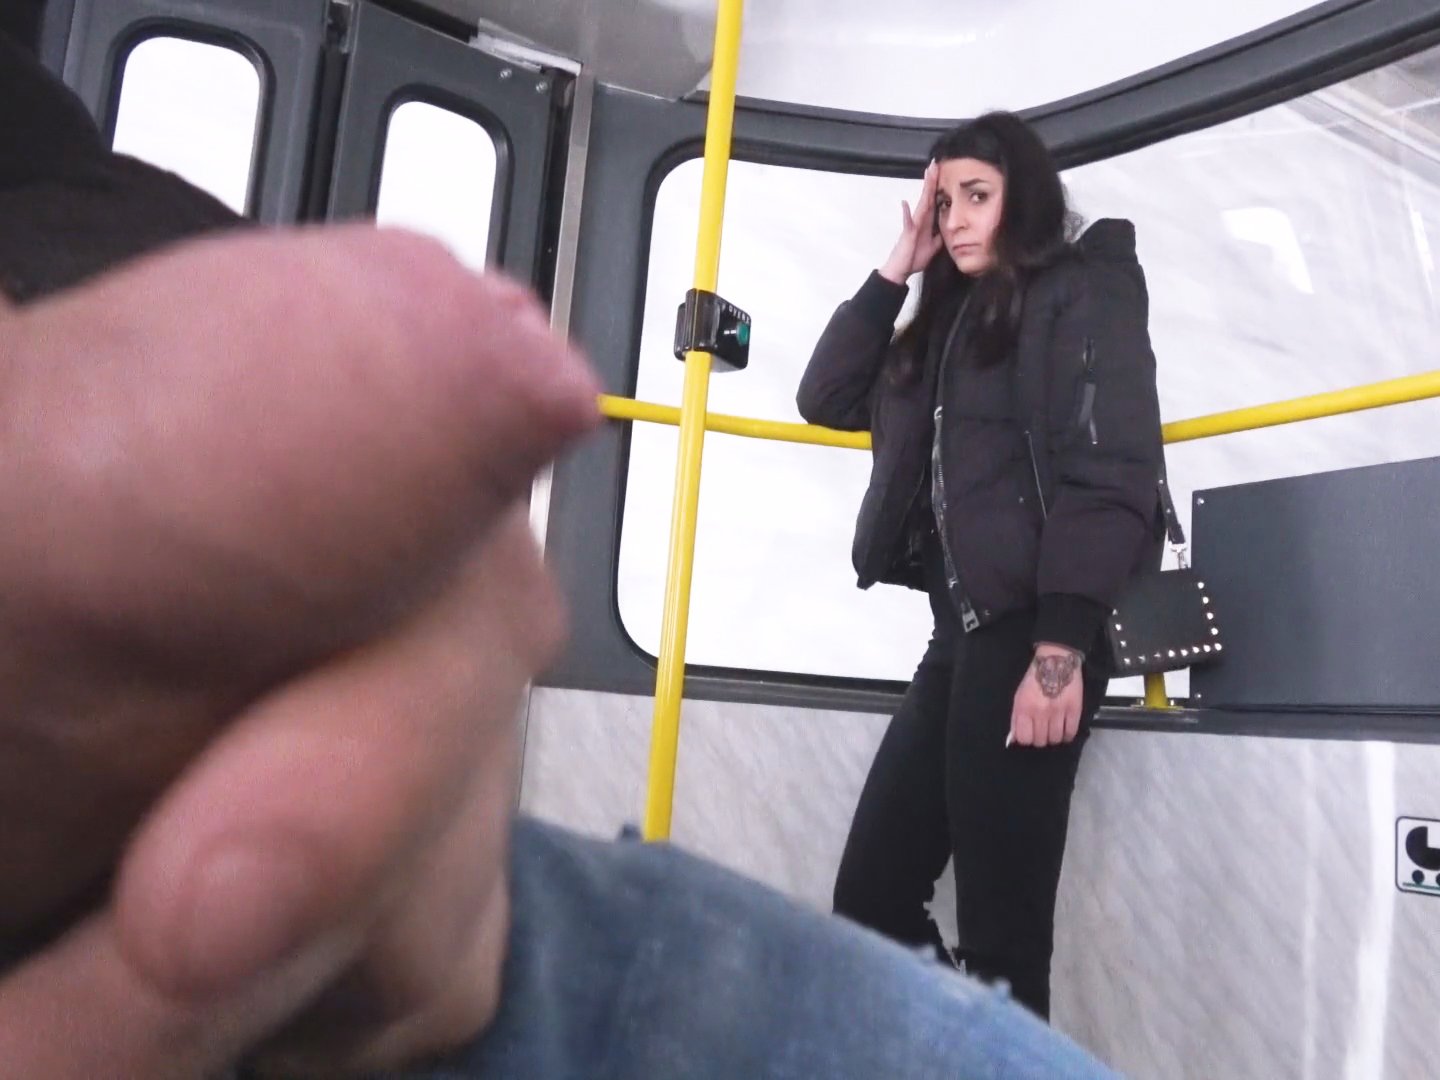 Femme me regarde se masturber sur un tram! pic